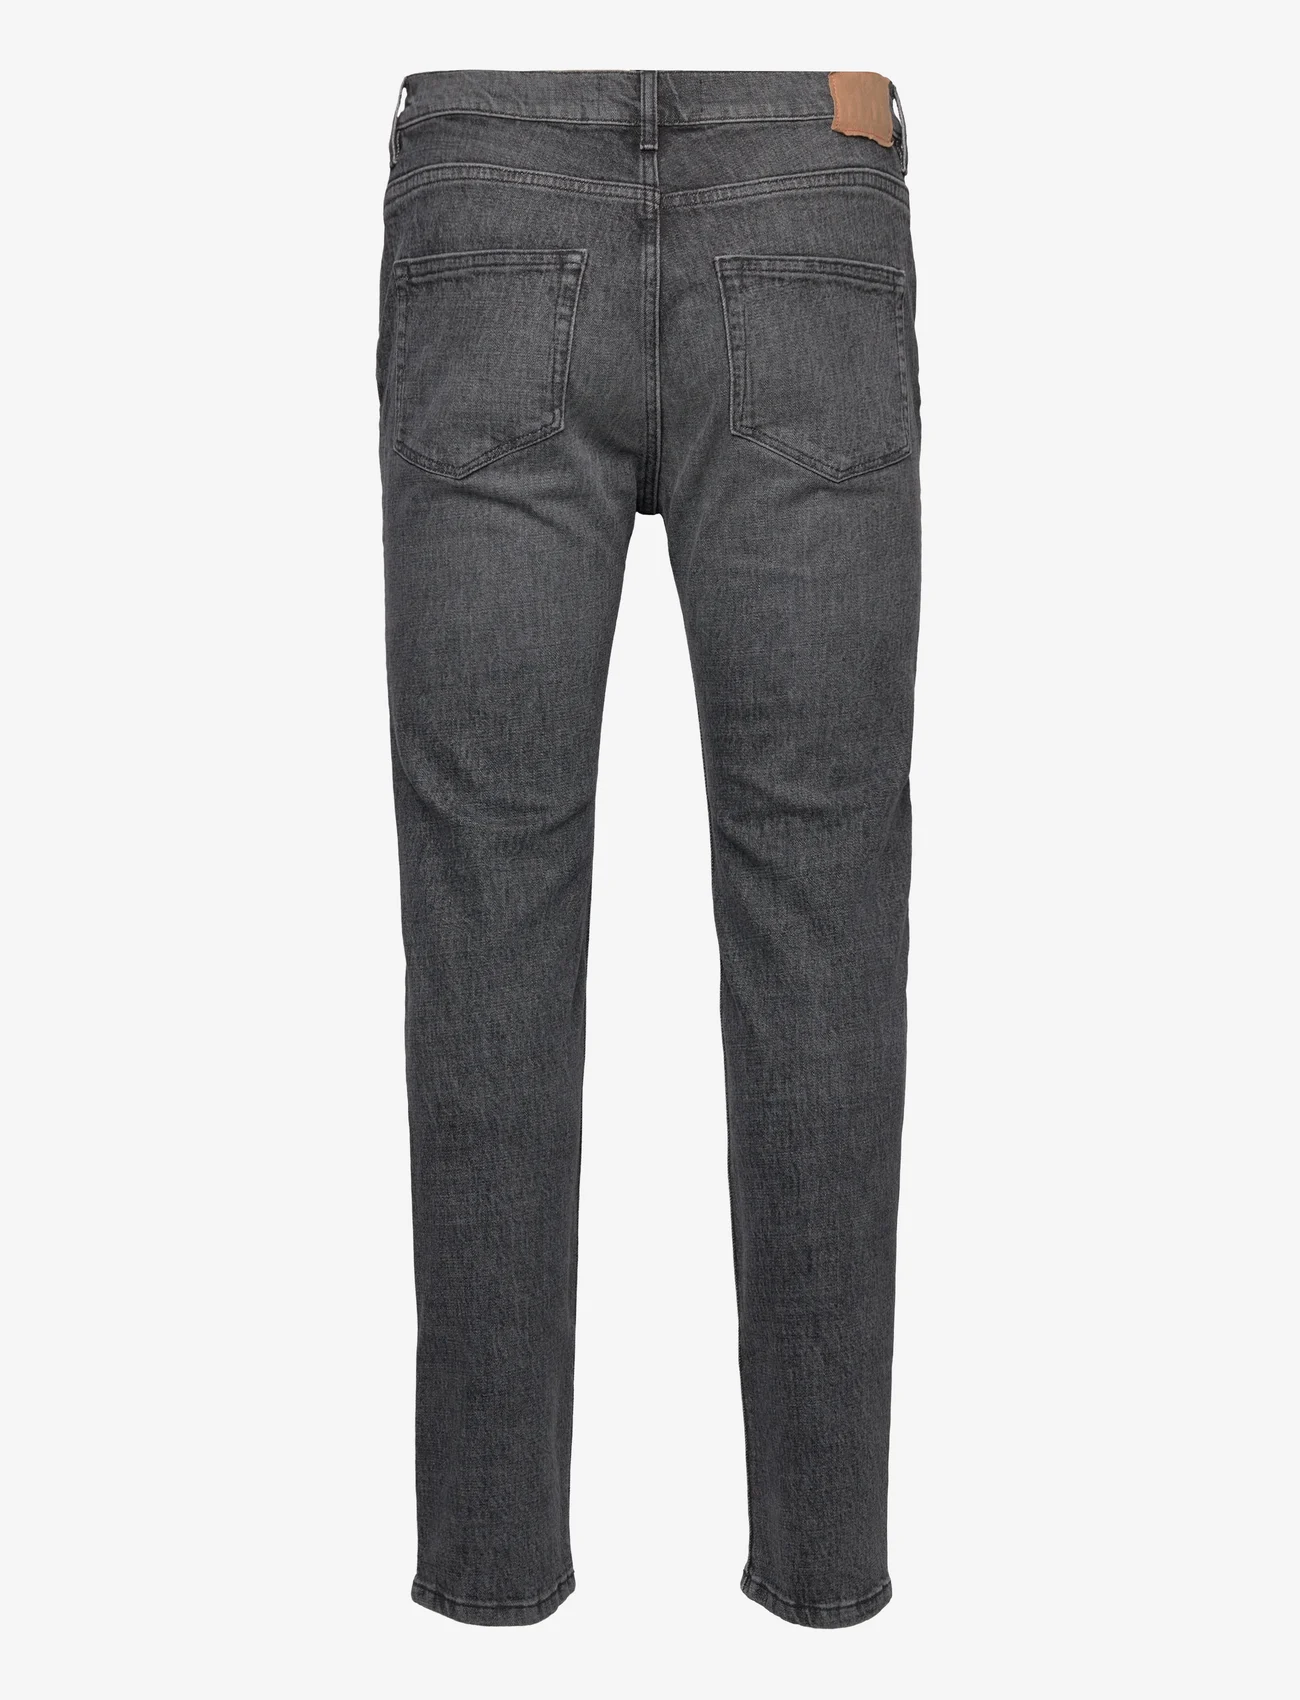 Jeanerica - SM001 Slim Jeans - chemises basiques - blackvintage82 - 2